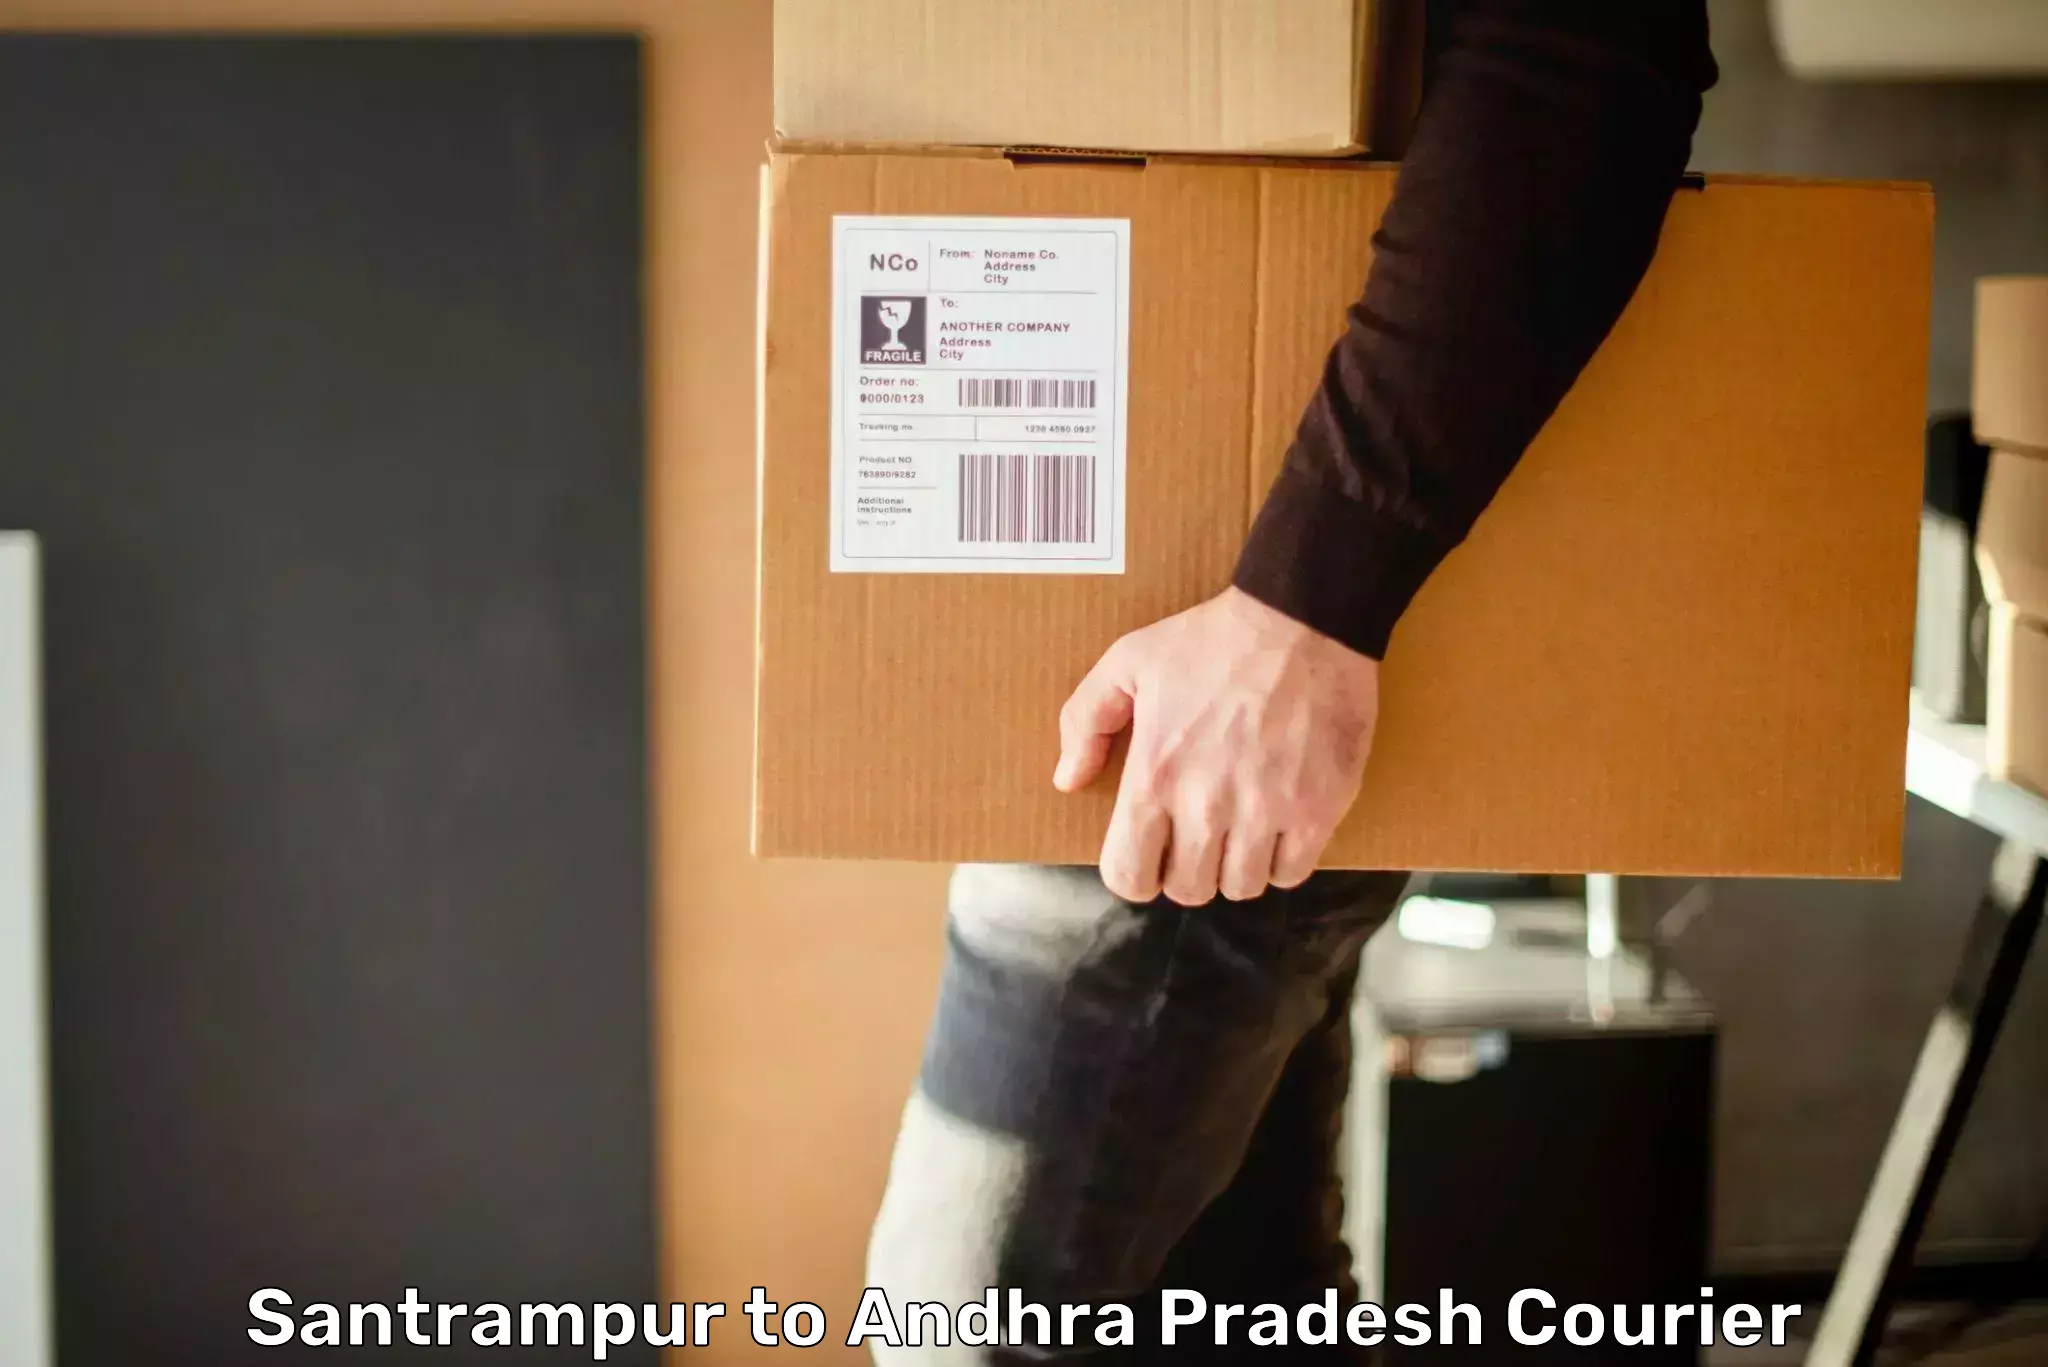 Courier service innovation Santrampur to Yerragondapalem